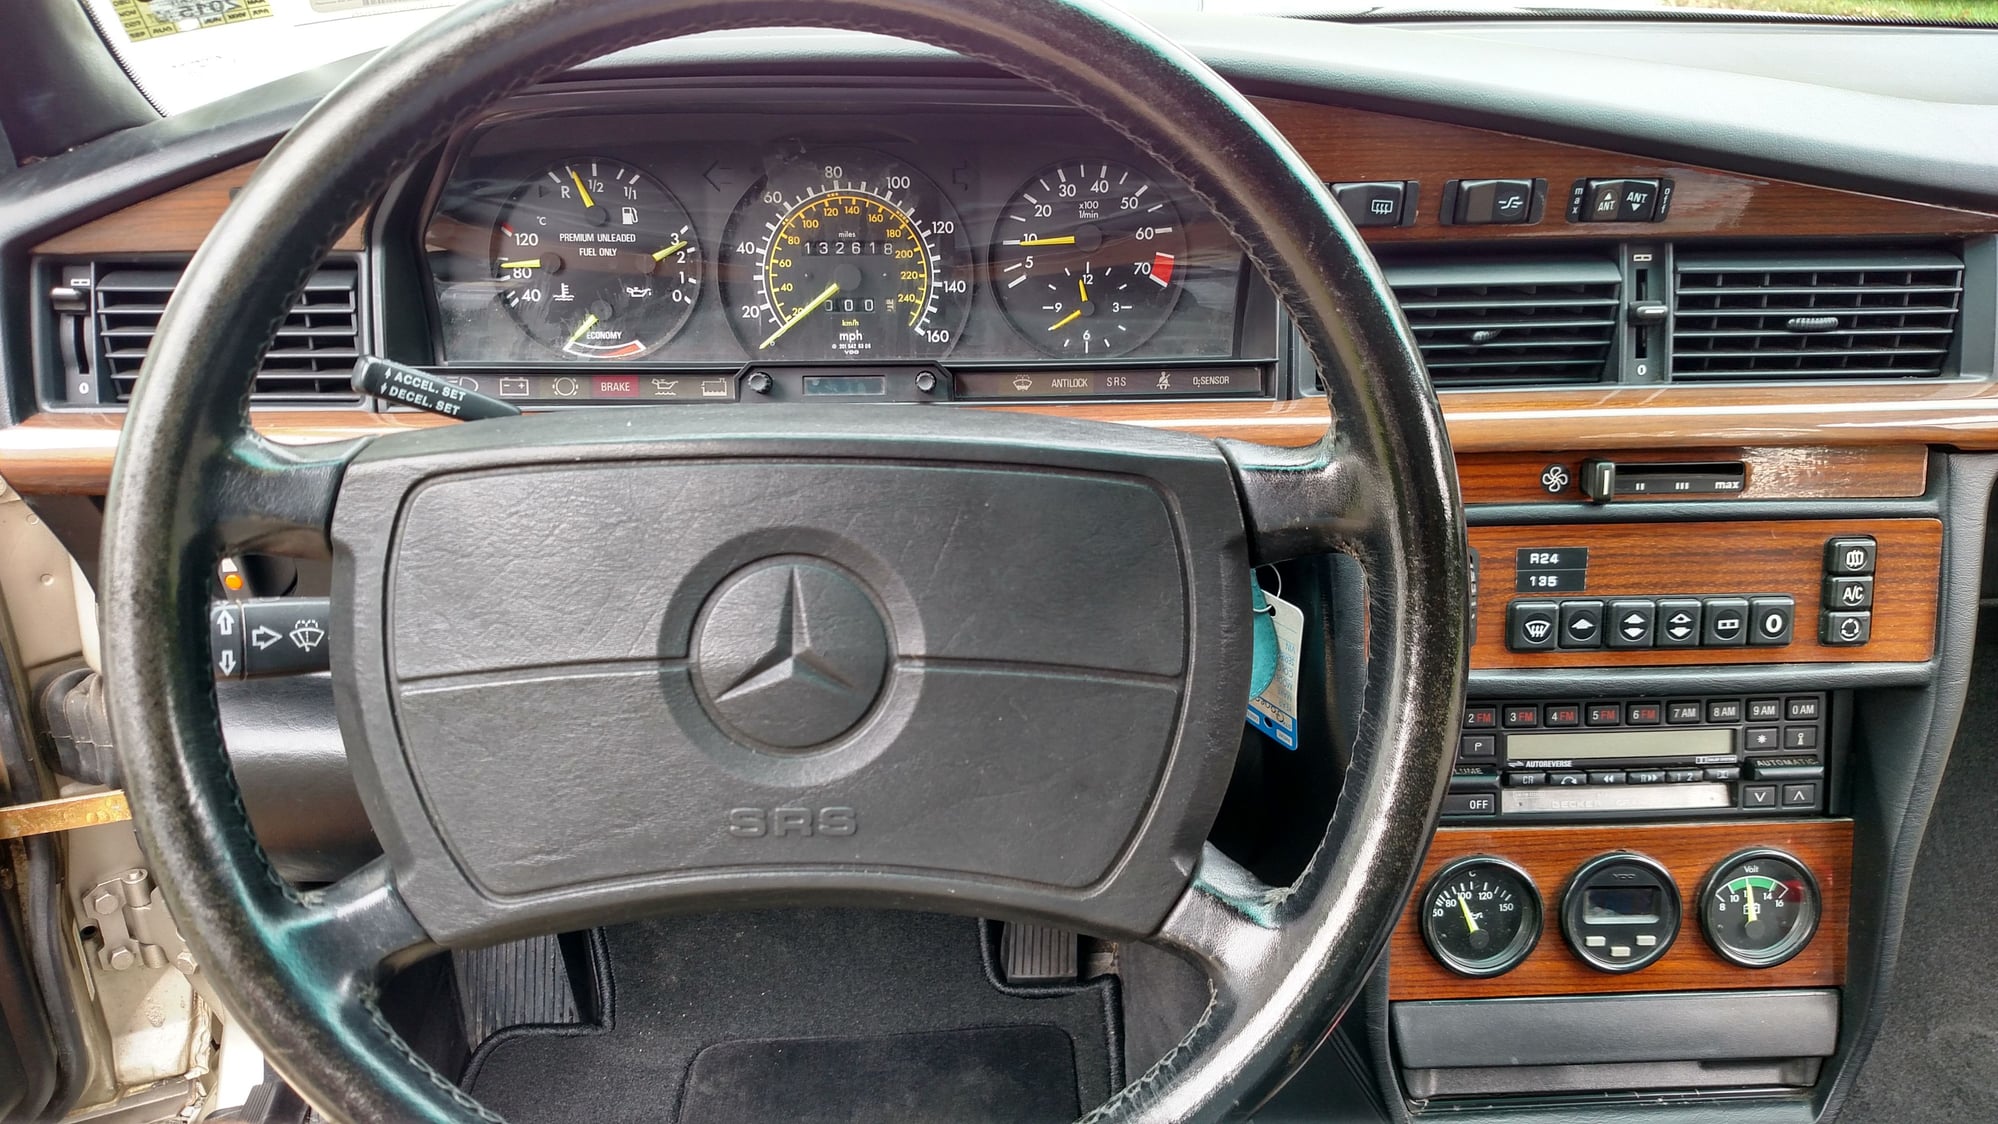 1987 Mercedes-Benz 190E - 1987 Mercedes 190E 2.3-16V - Cosworth - Used - VIN WDBDA34D8HF291352 - 132,000 Miles - 4 cyl - 2WD - Manual - Sedan - Gold - Torrington, CT 06790, United States